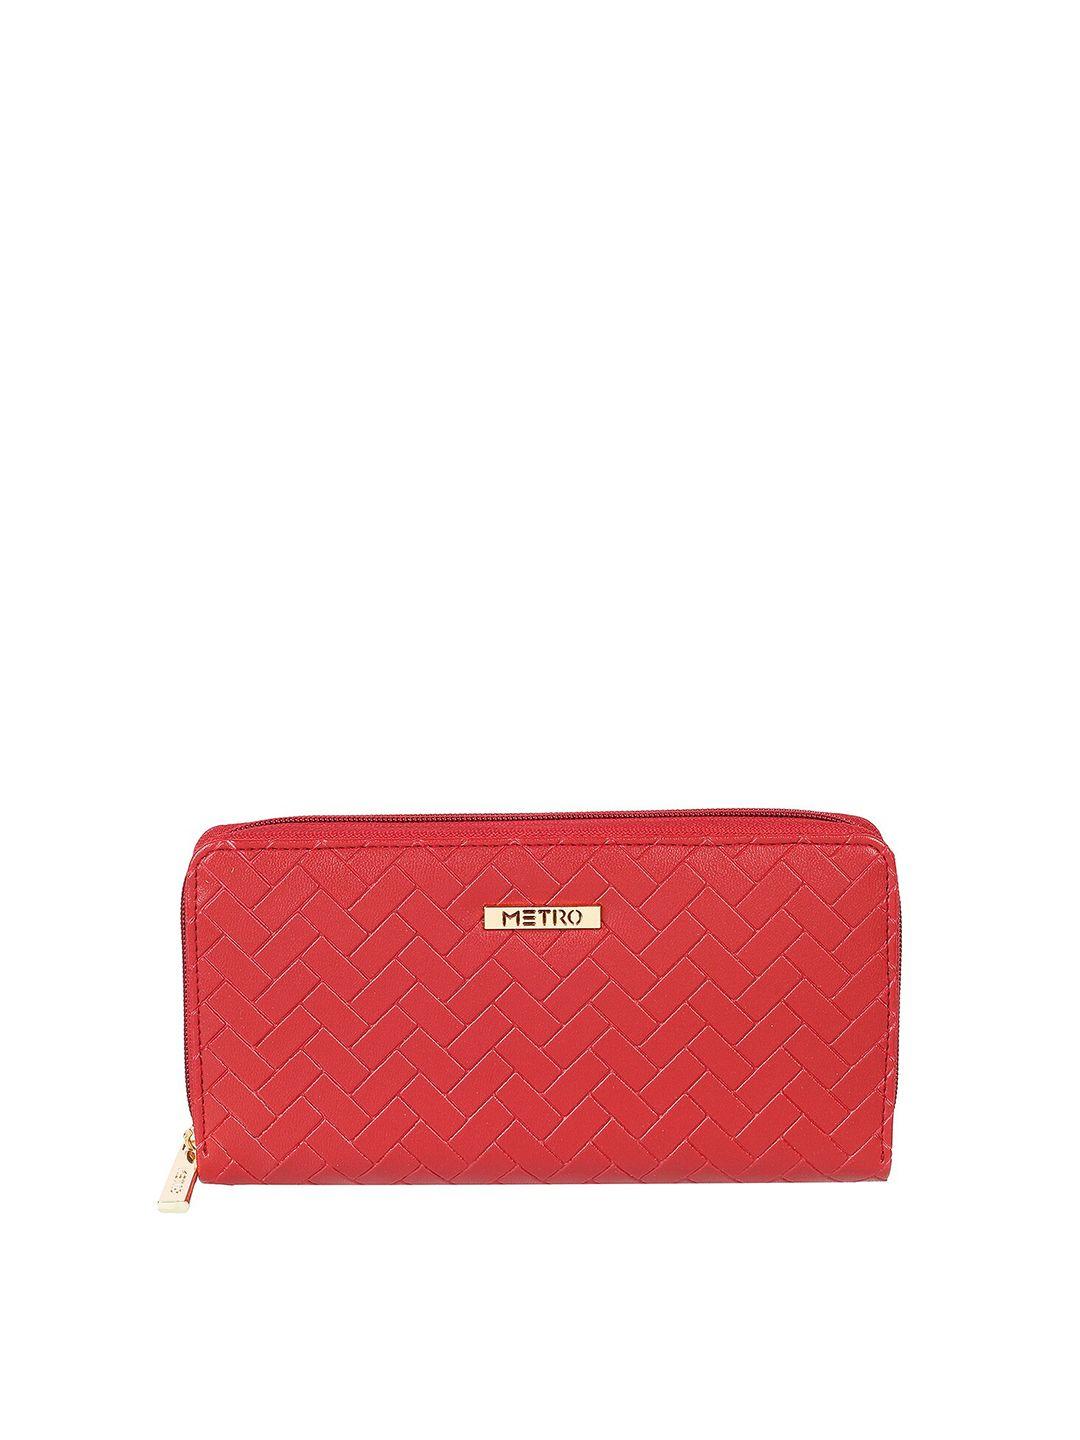 metro women red & gold-toned checked zip around wallet